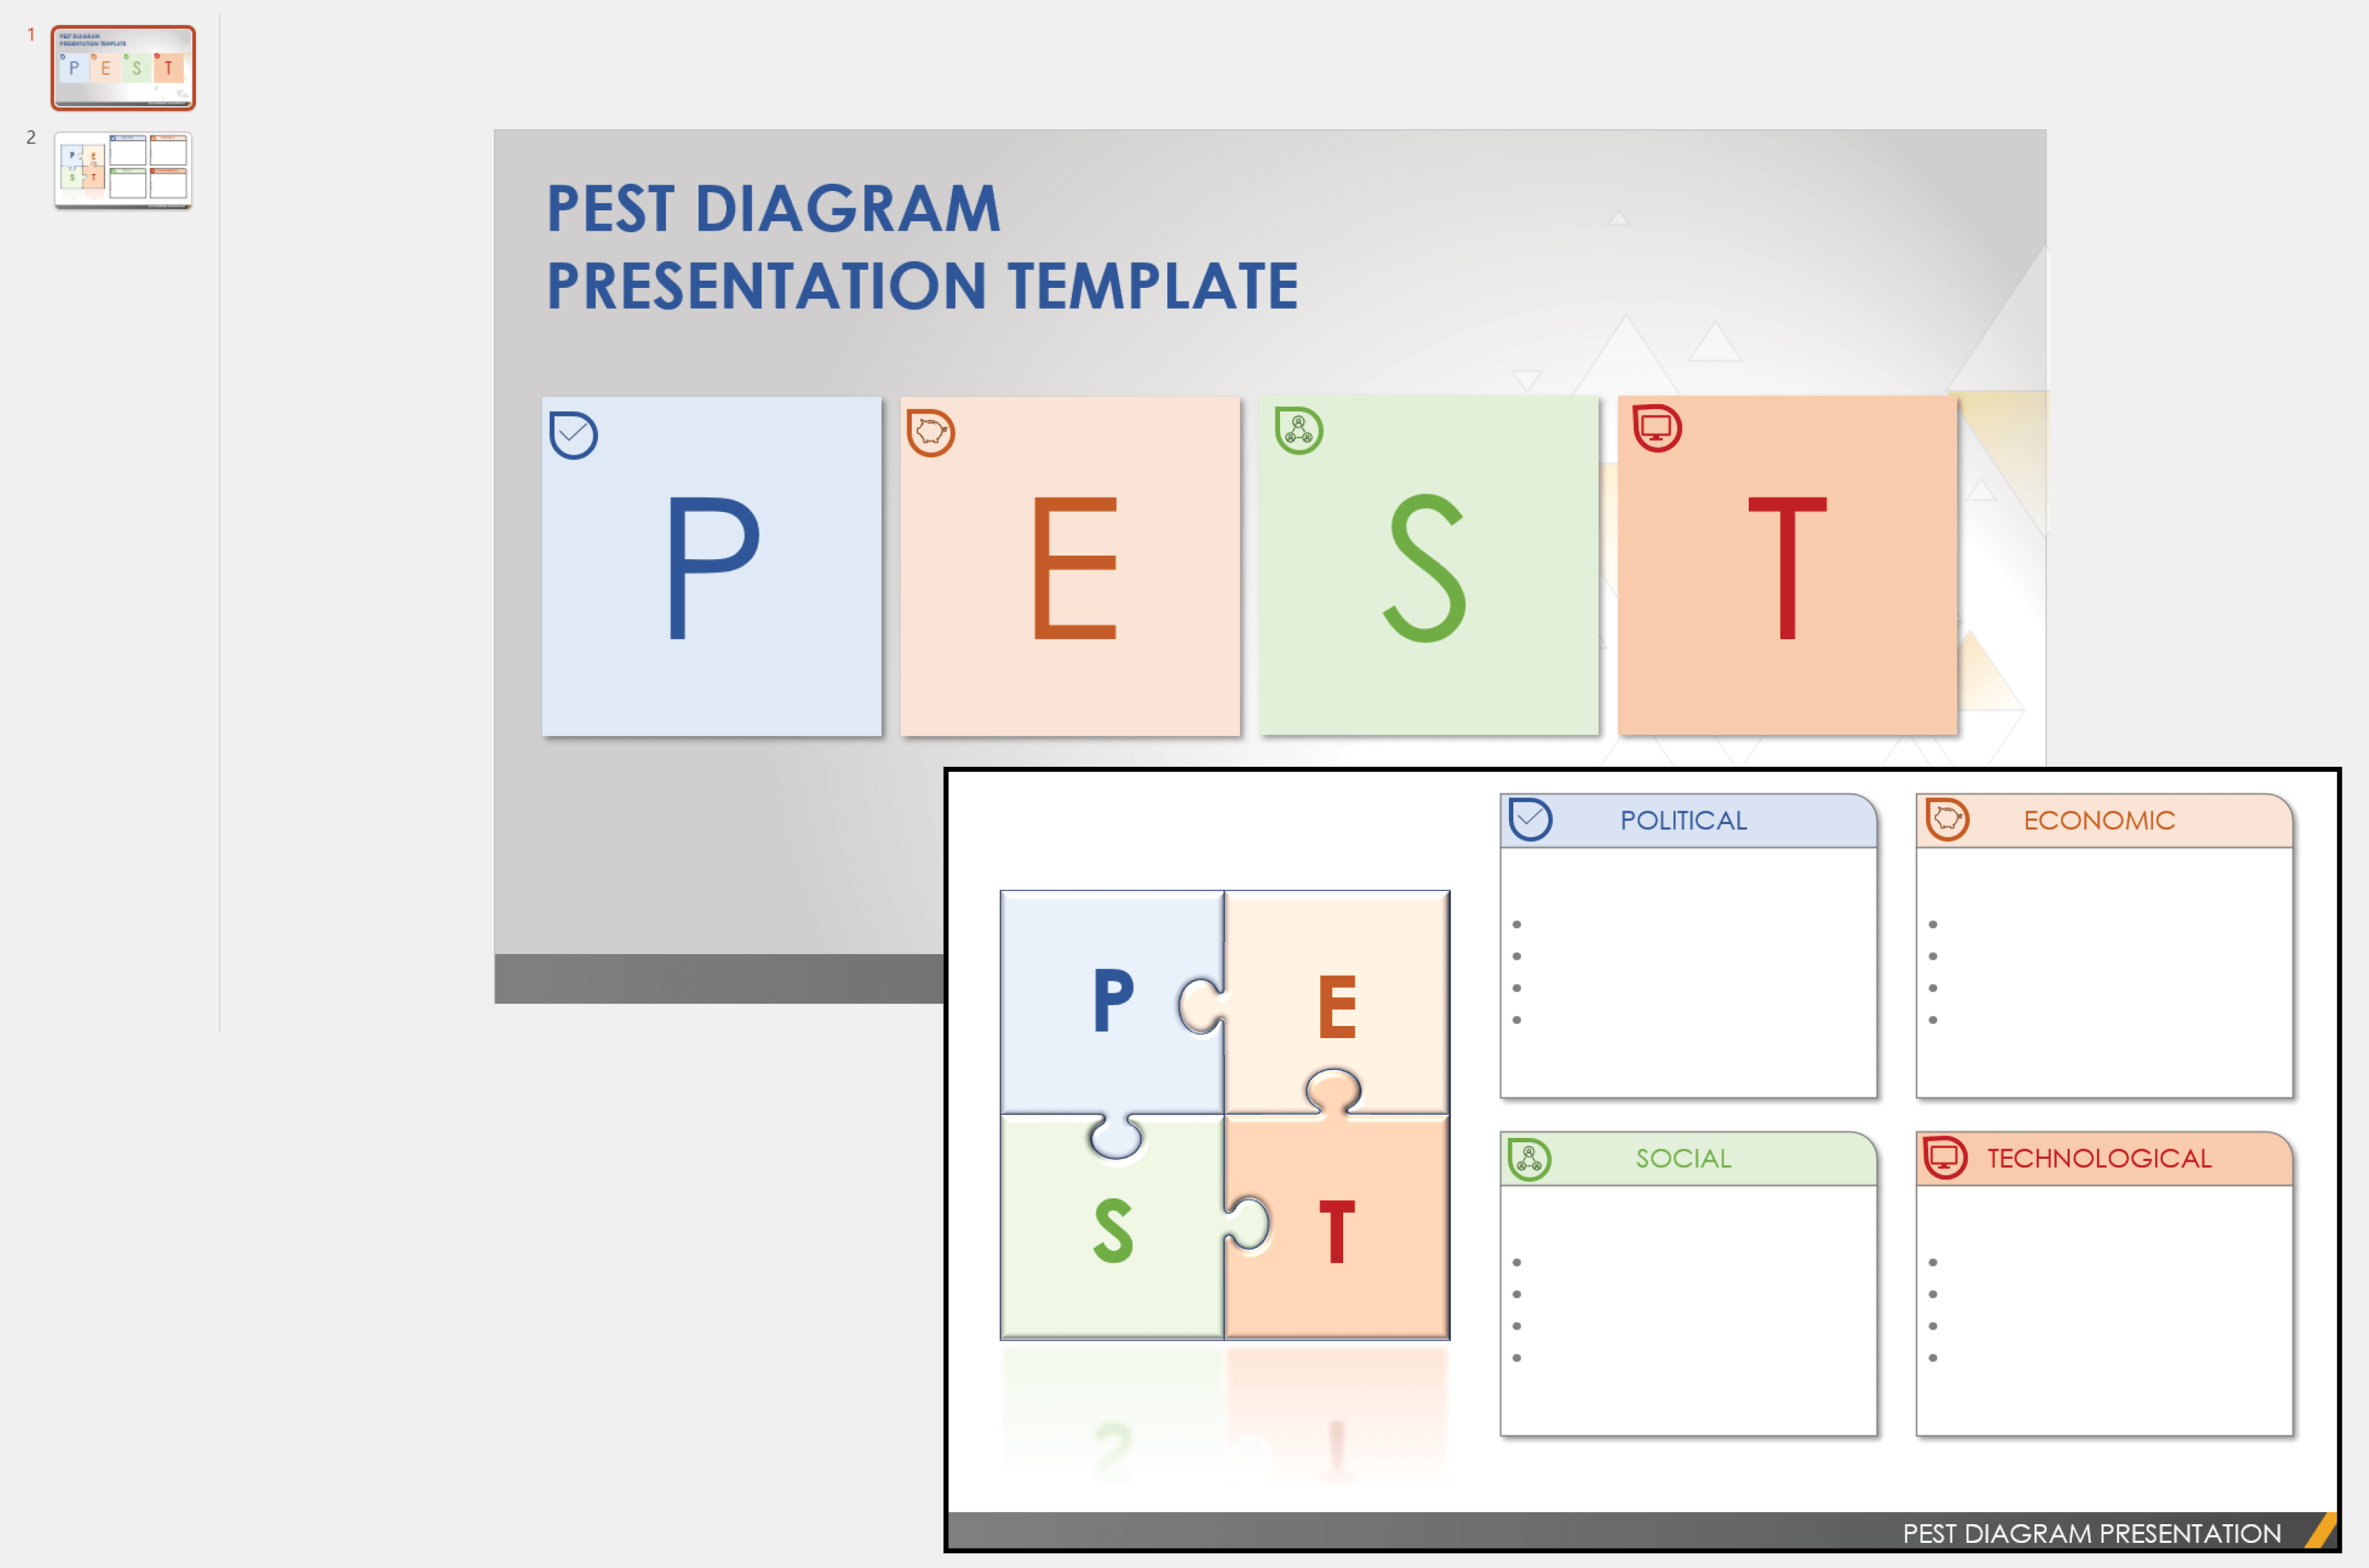 PEST Diagram Presentation Template